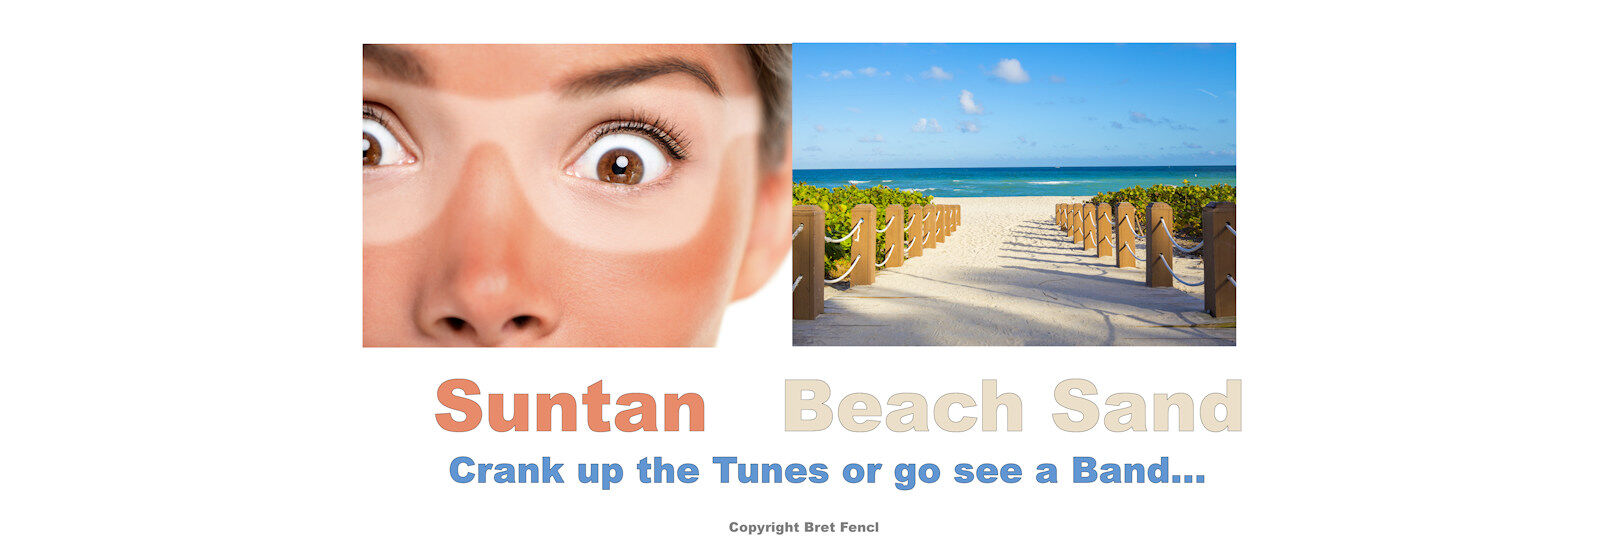 Suntan, Beach Sand, Crank up the tunes or go see a band...